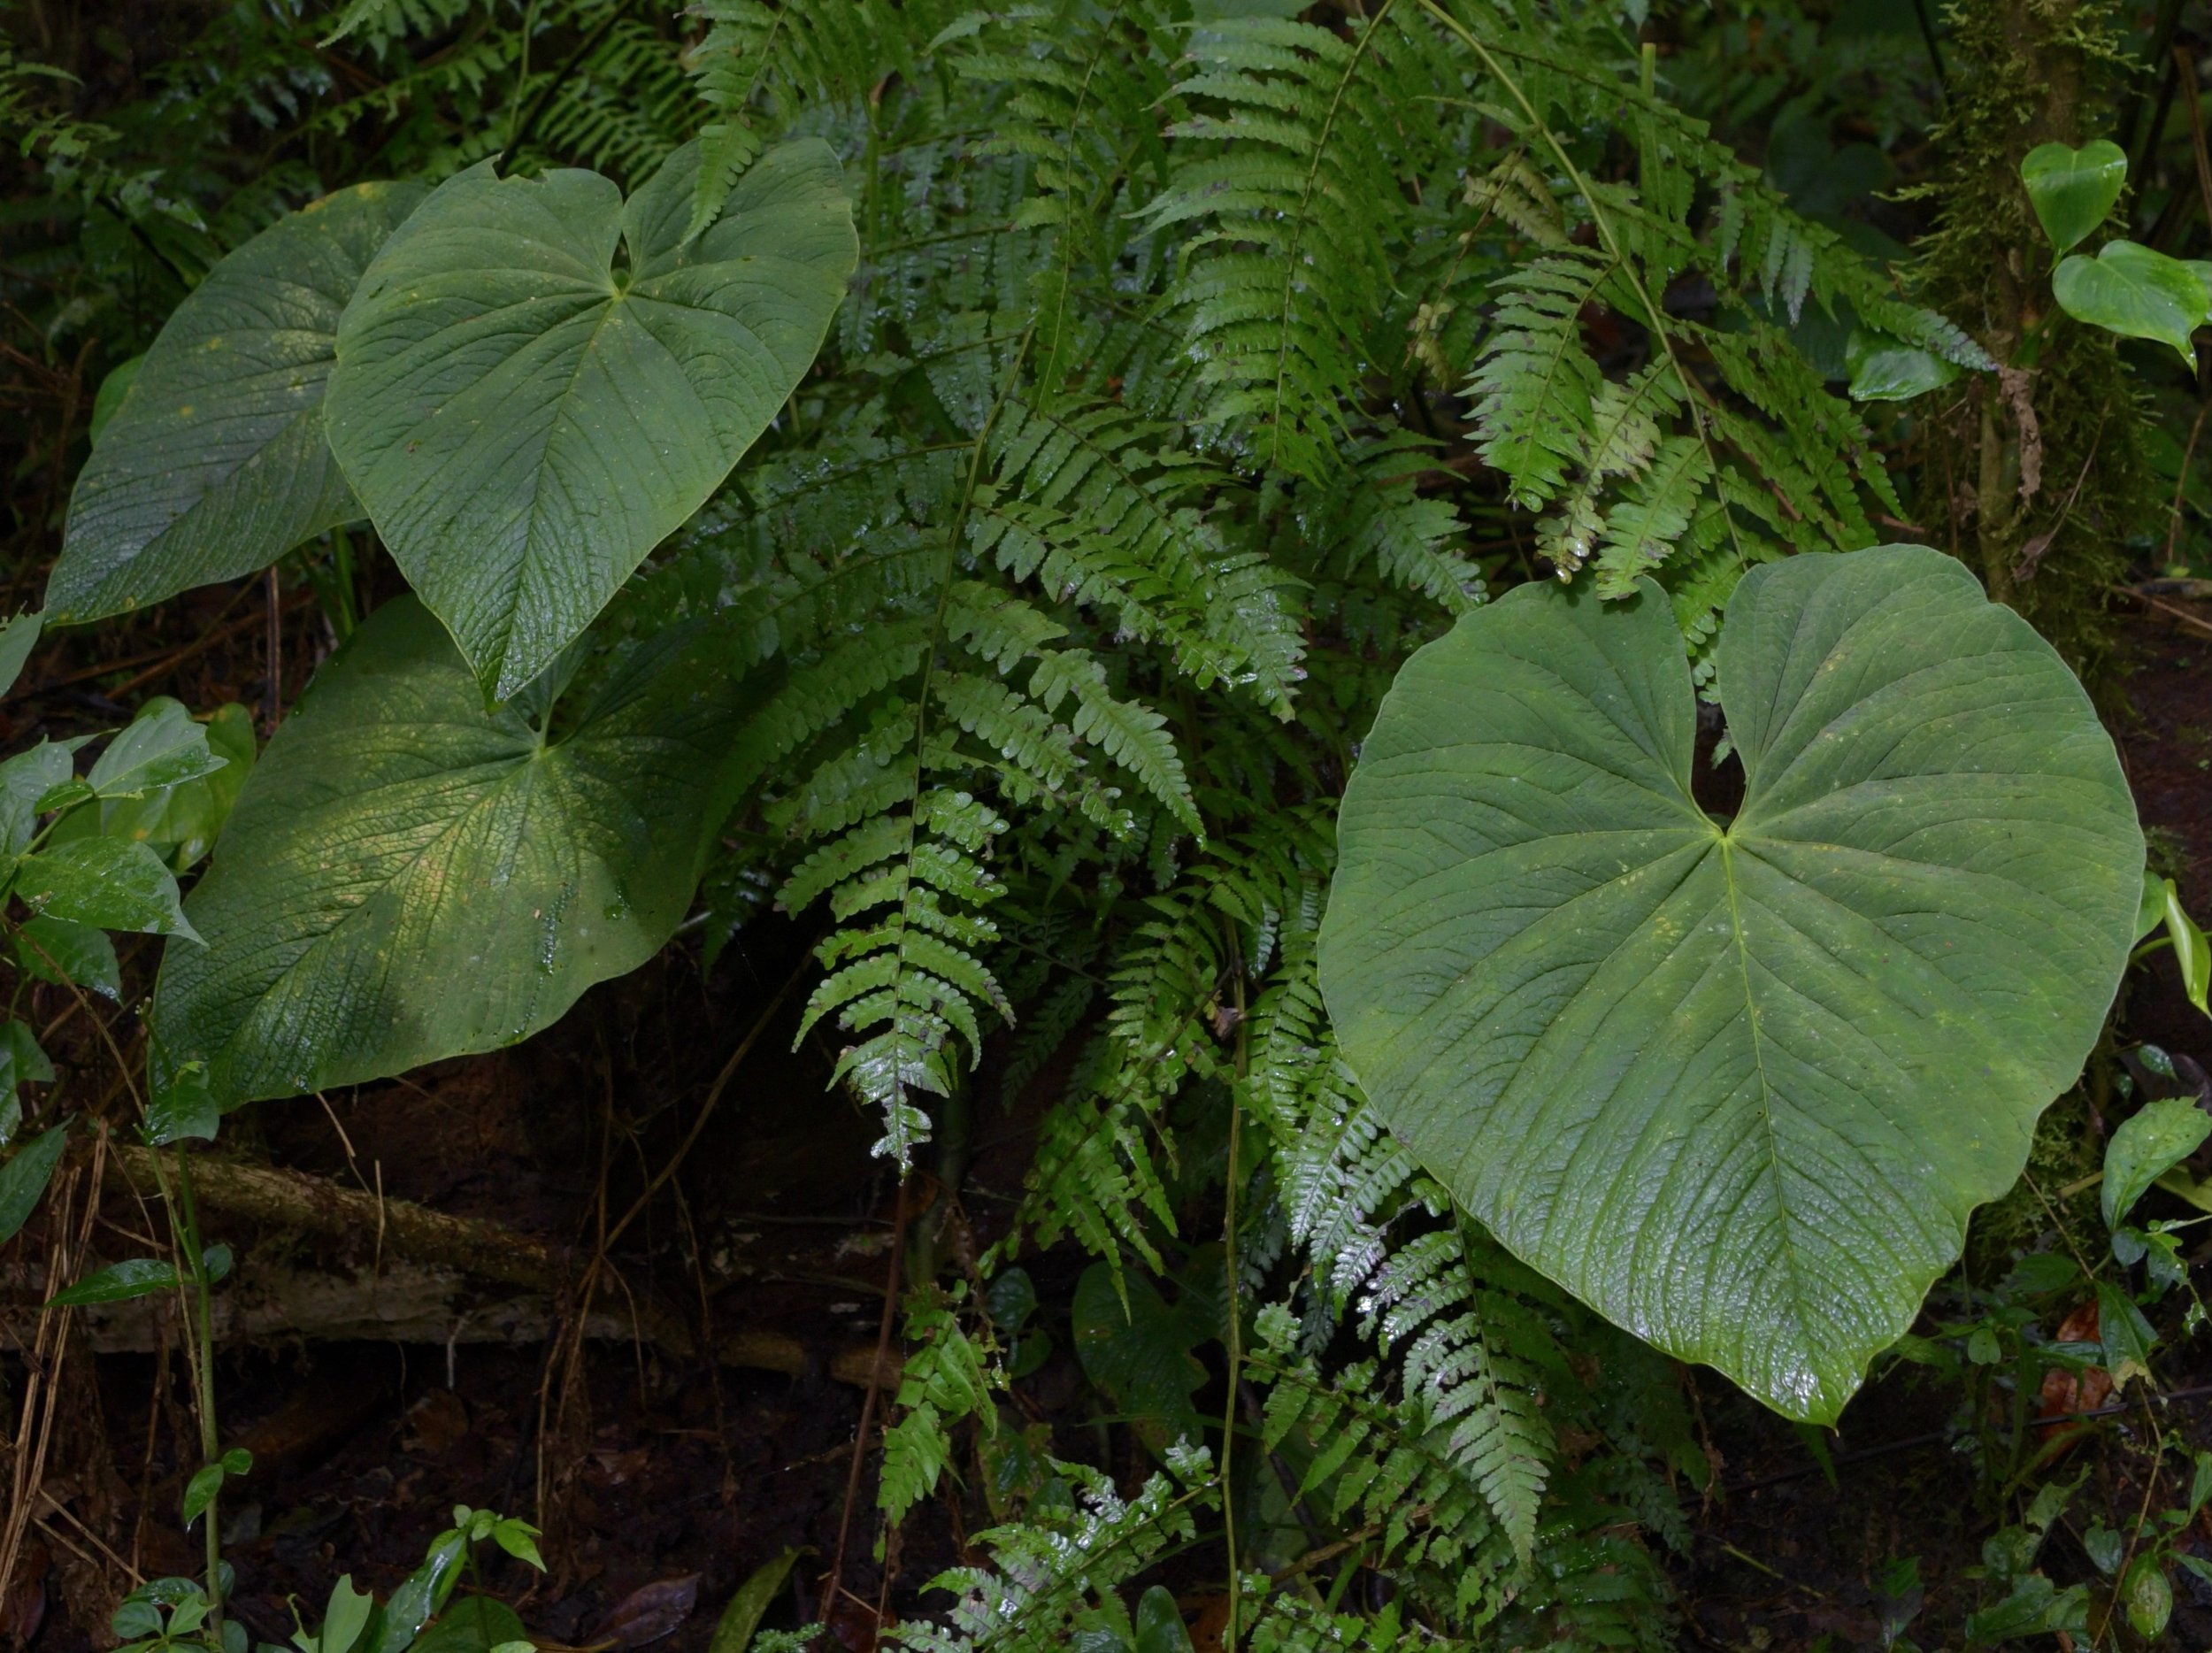  Undescribed Velvet-Leaf  Anthurium  sp., Colombia. Image: ©J. Vannini 